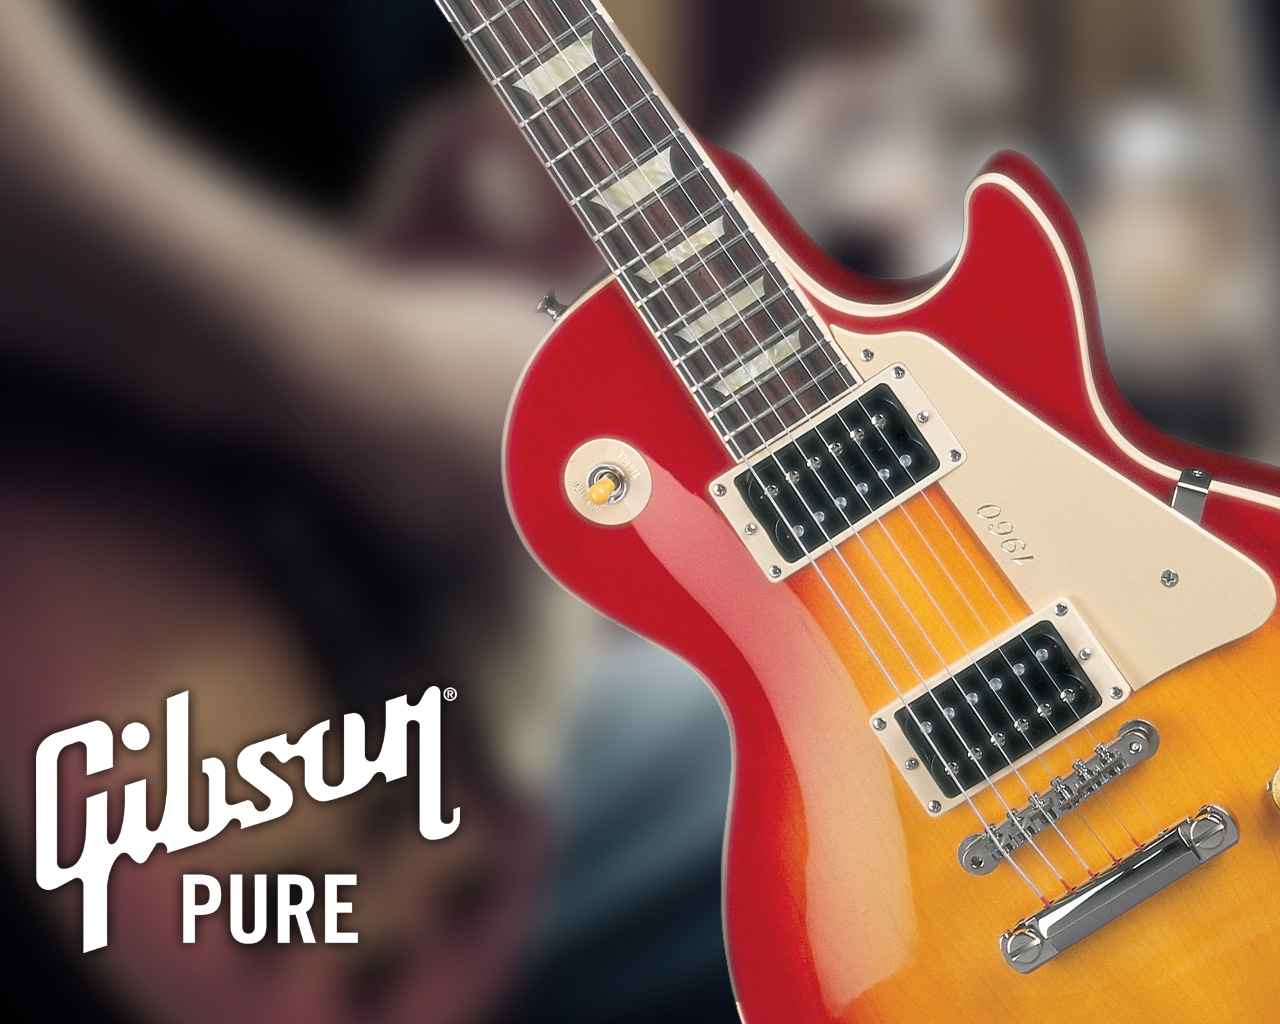 Guitar Gibson 1280x1024